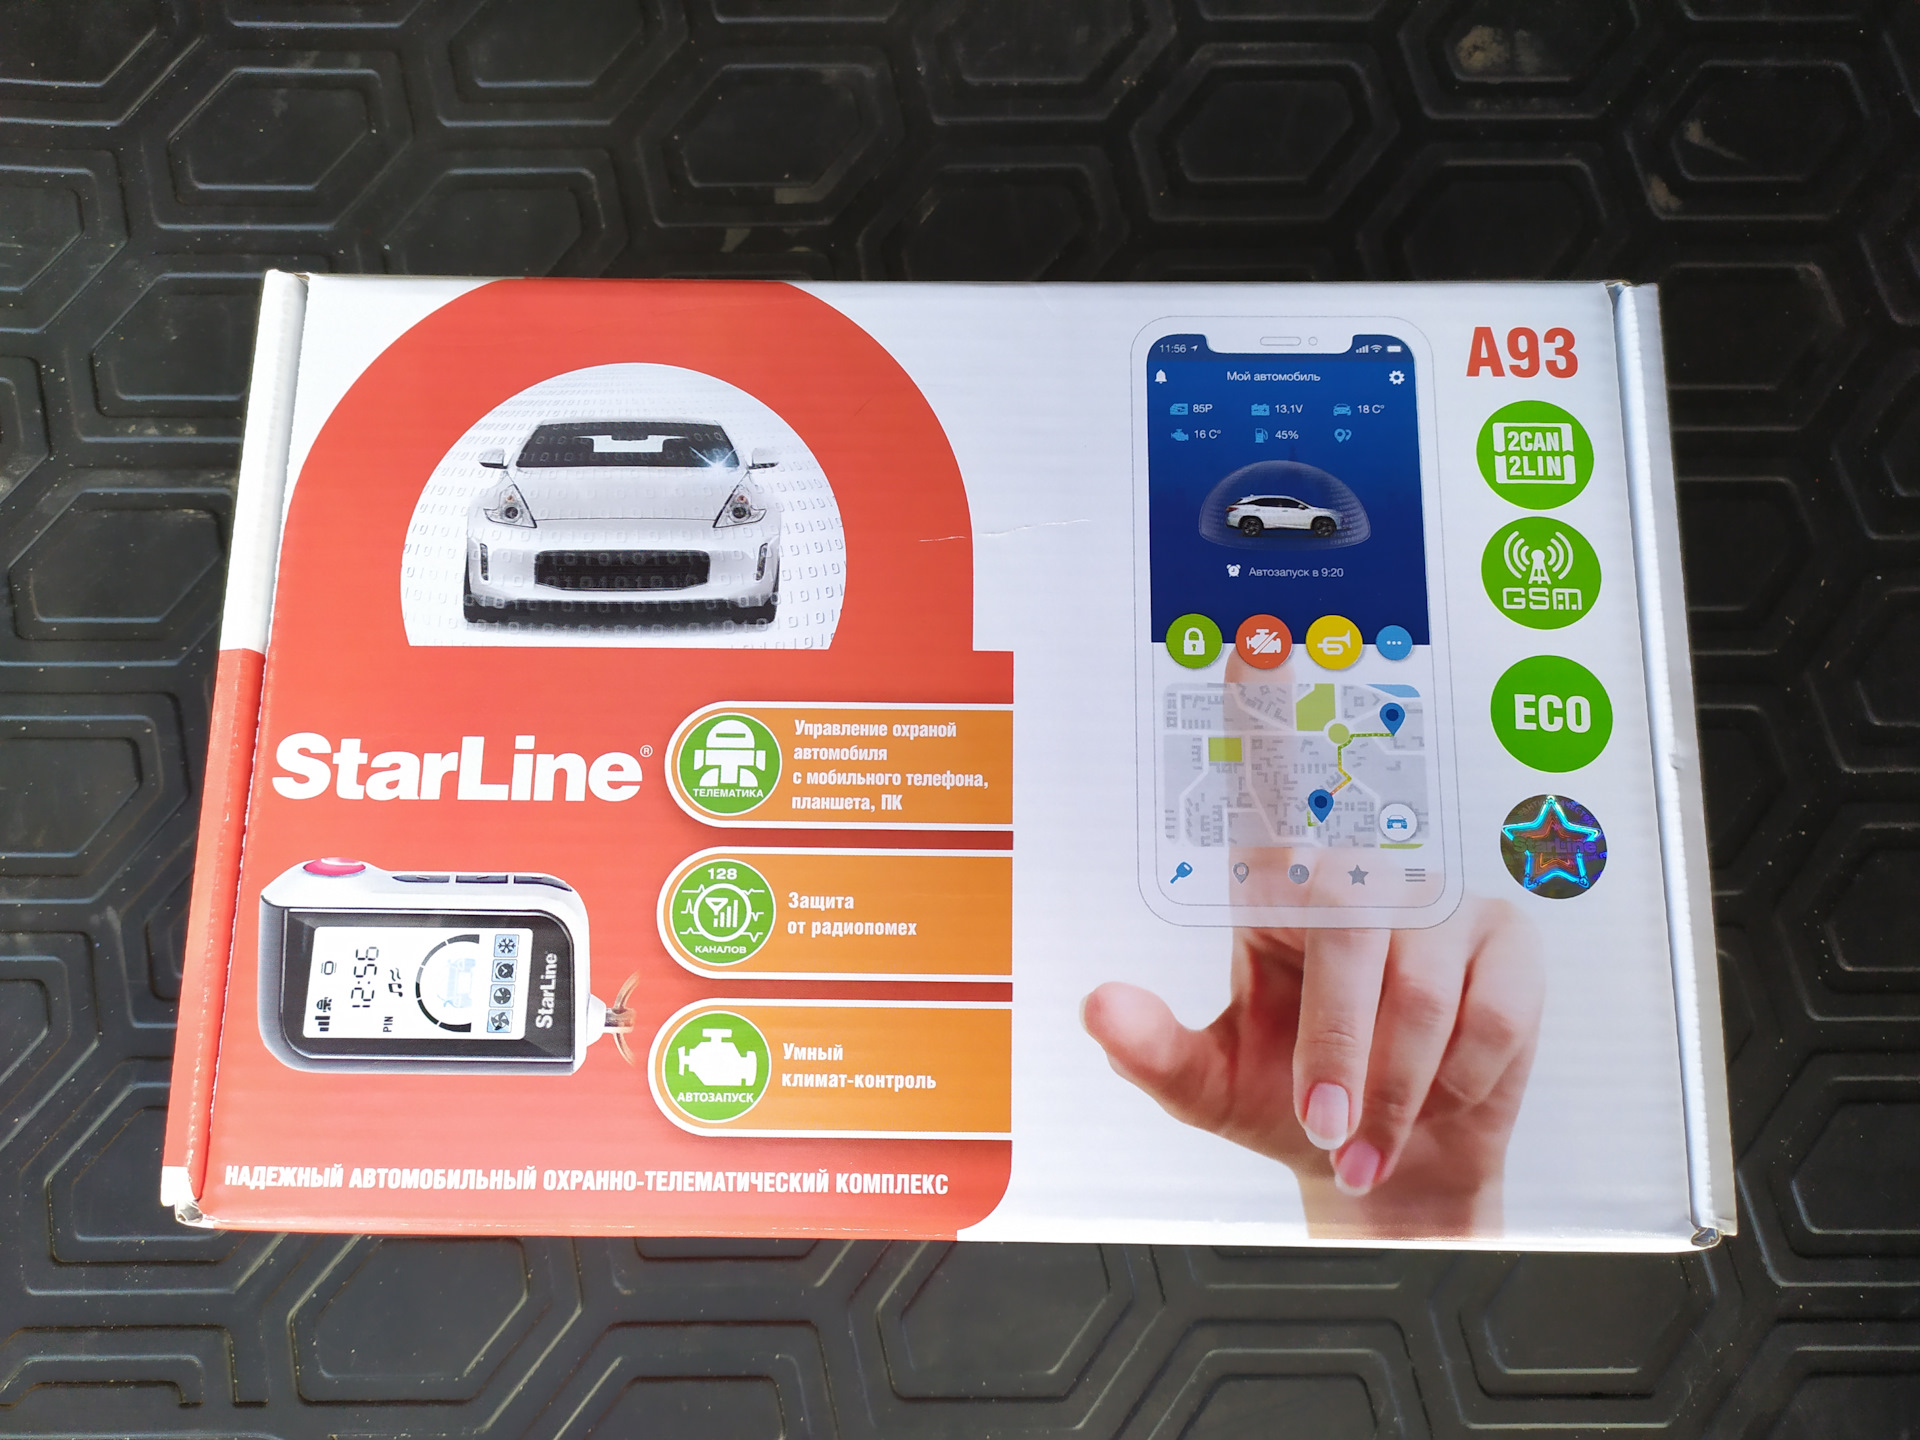 Starline 2can 2lin gsm. Блок STARLINE a93 v2. Автосигнализация STARLINE a93 v2 2can+2lin GSM Eco. STARLINE a93 2can+2lin брелок. STARLINE a93 v2 Eco.